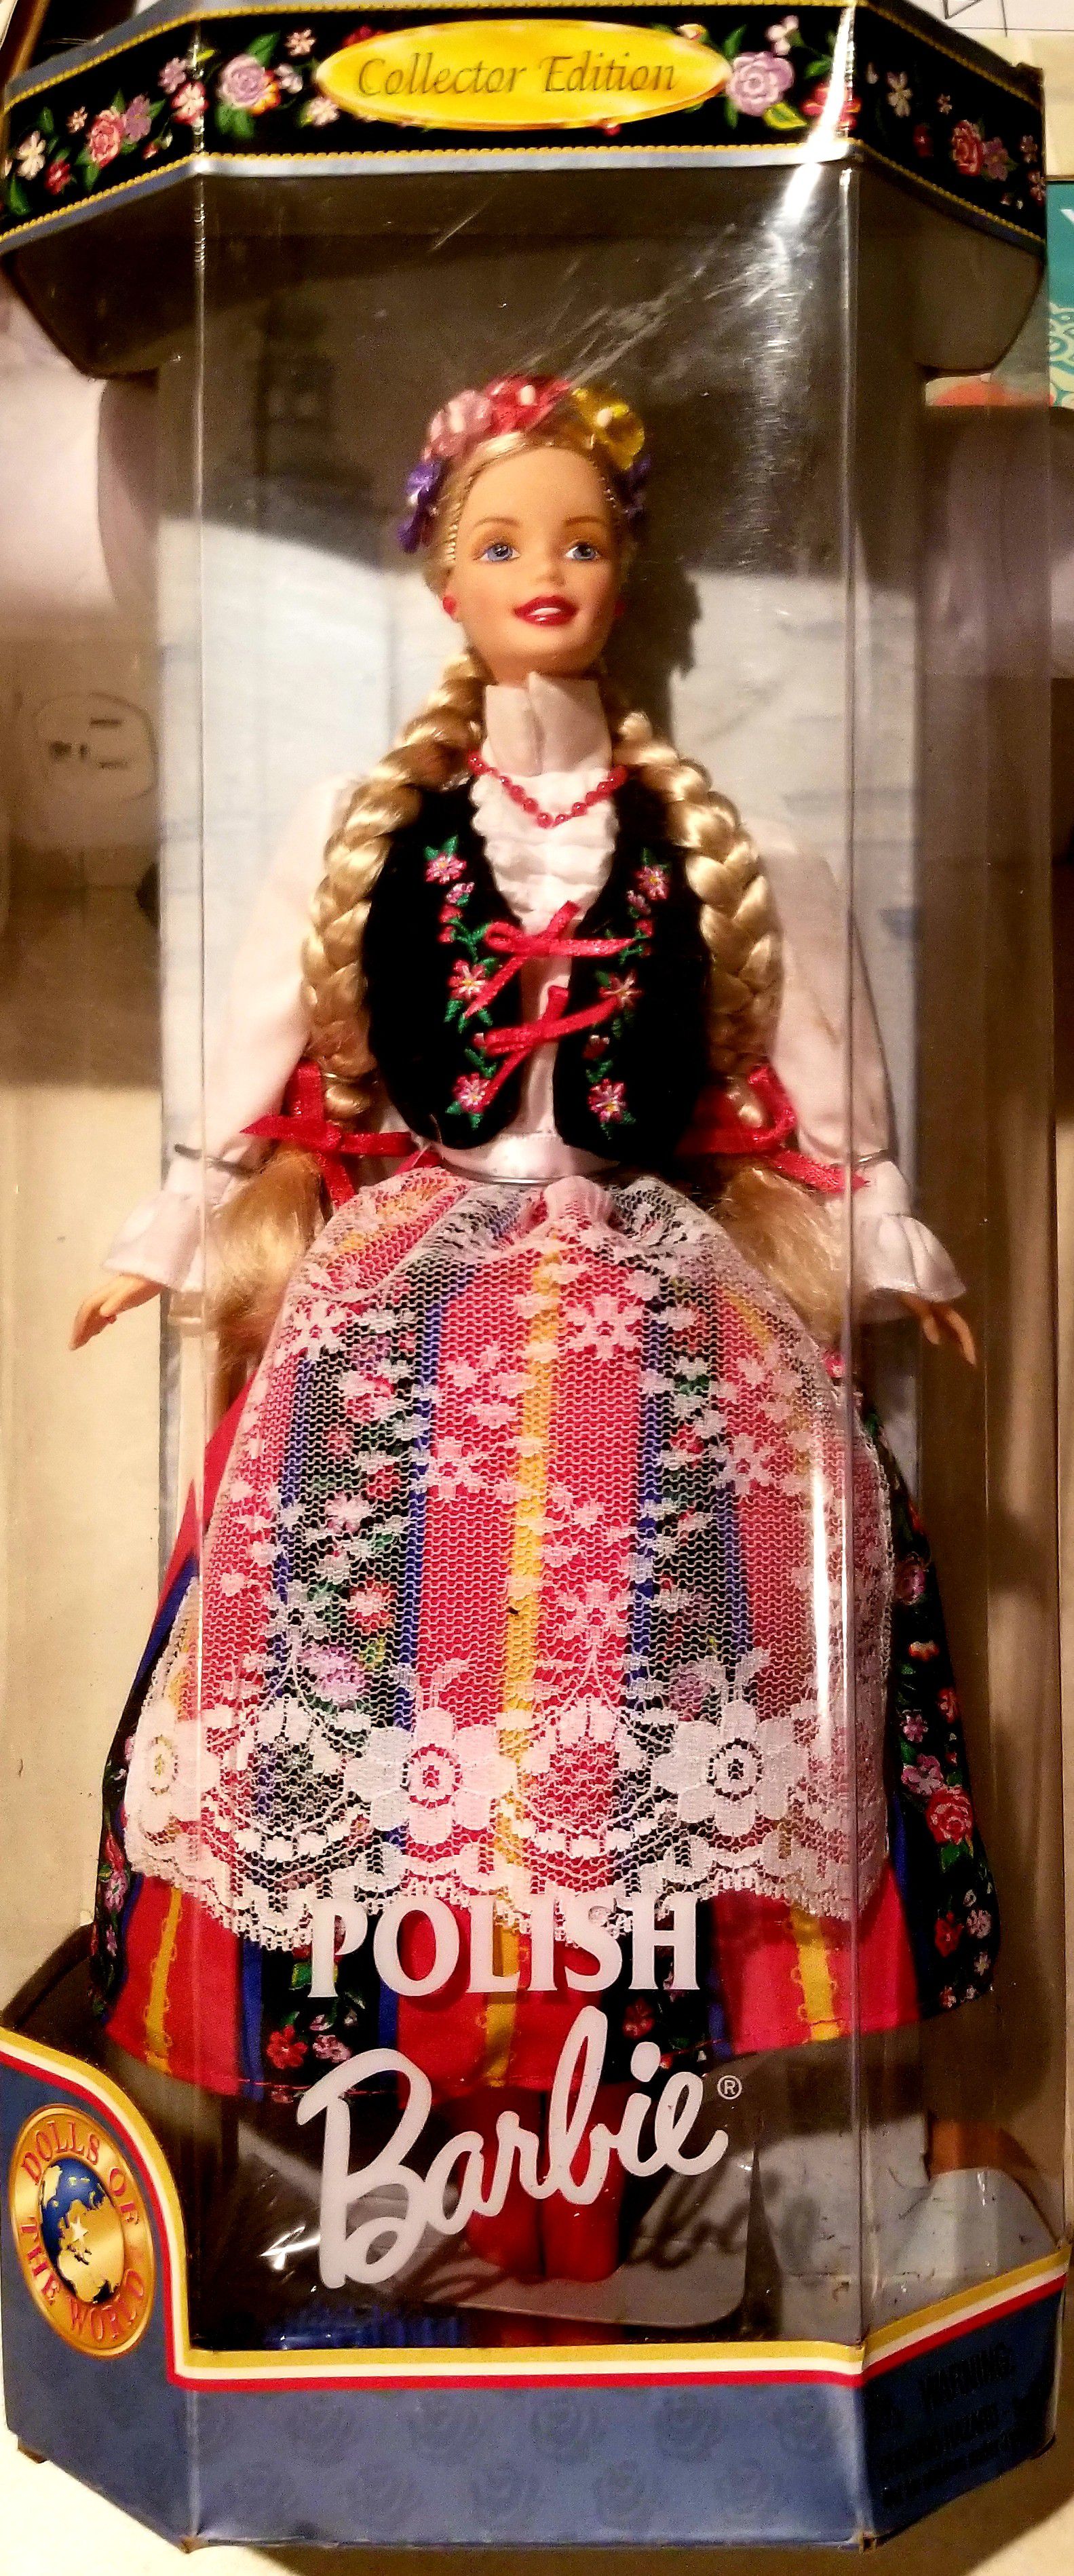 Polish Barbie, Dolls of the world Collectors dition polish Barbie #18560 Mattel